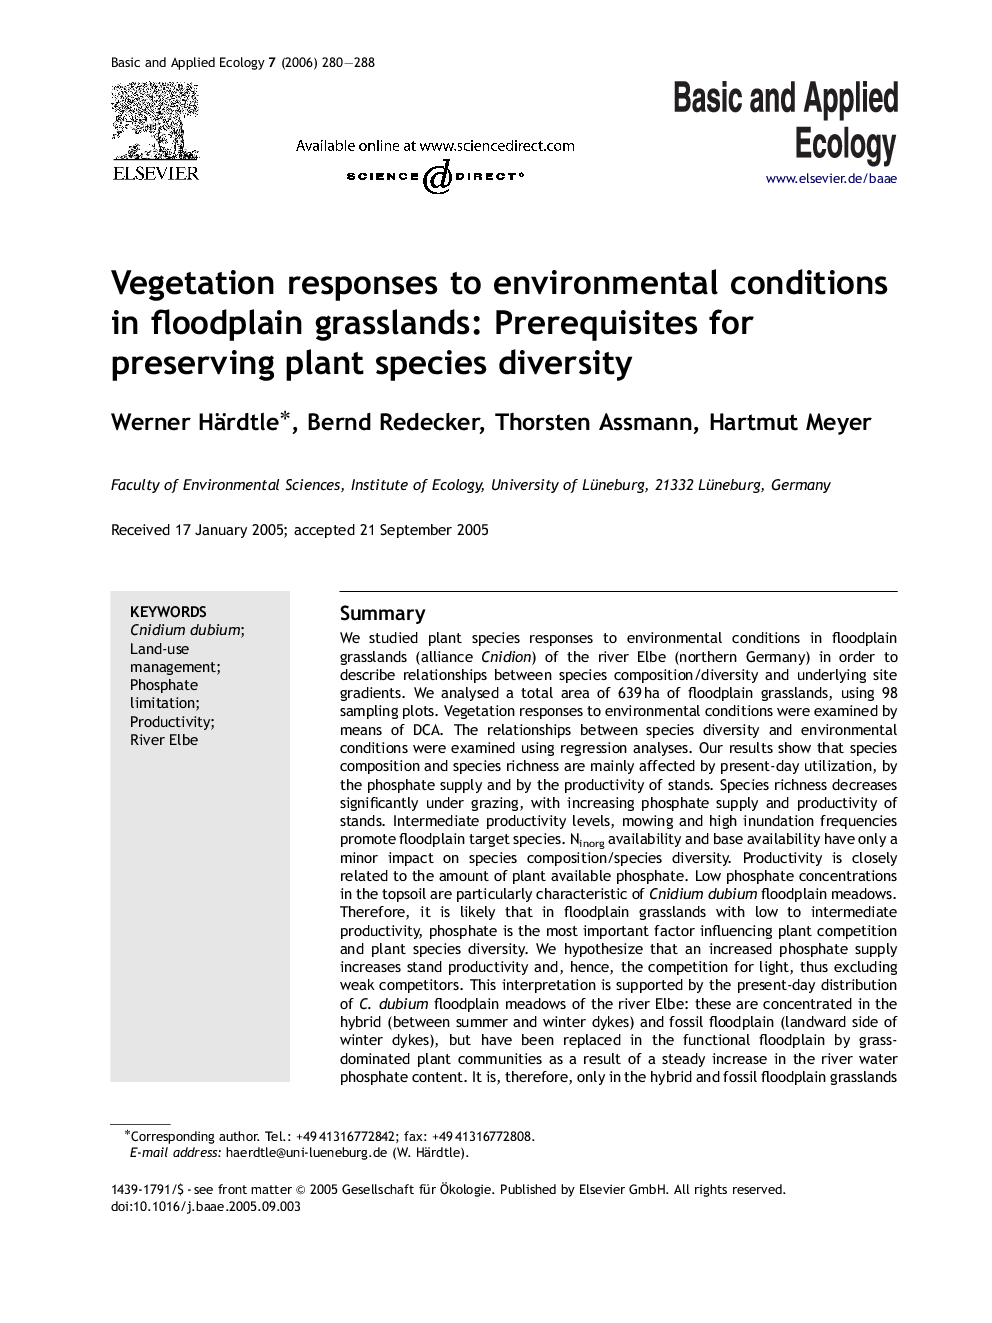 Vegetation responses to environmental conditions in floodplain grasslands: Prerequisites for preserving plant species diversity